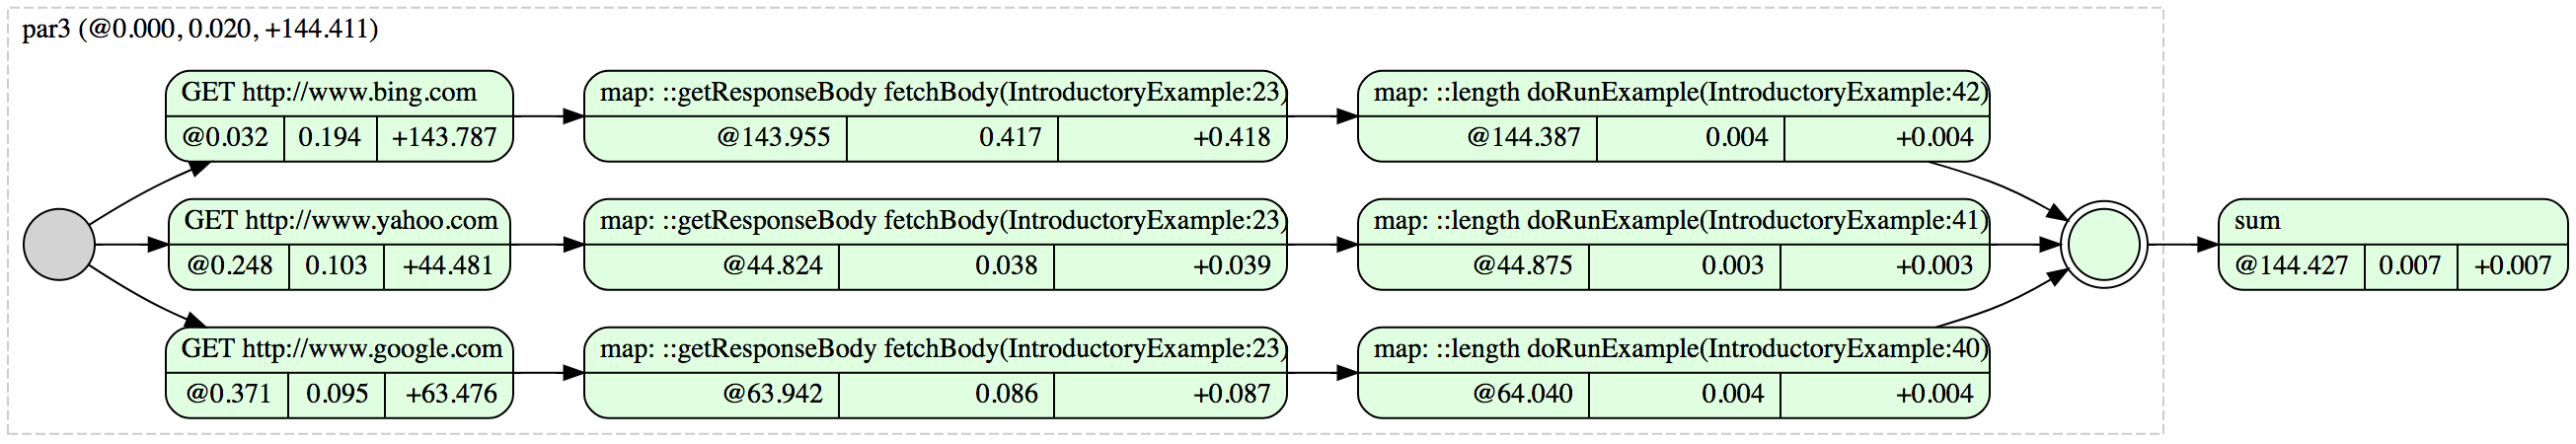 sum-lengths-graphviz-example.png